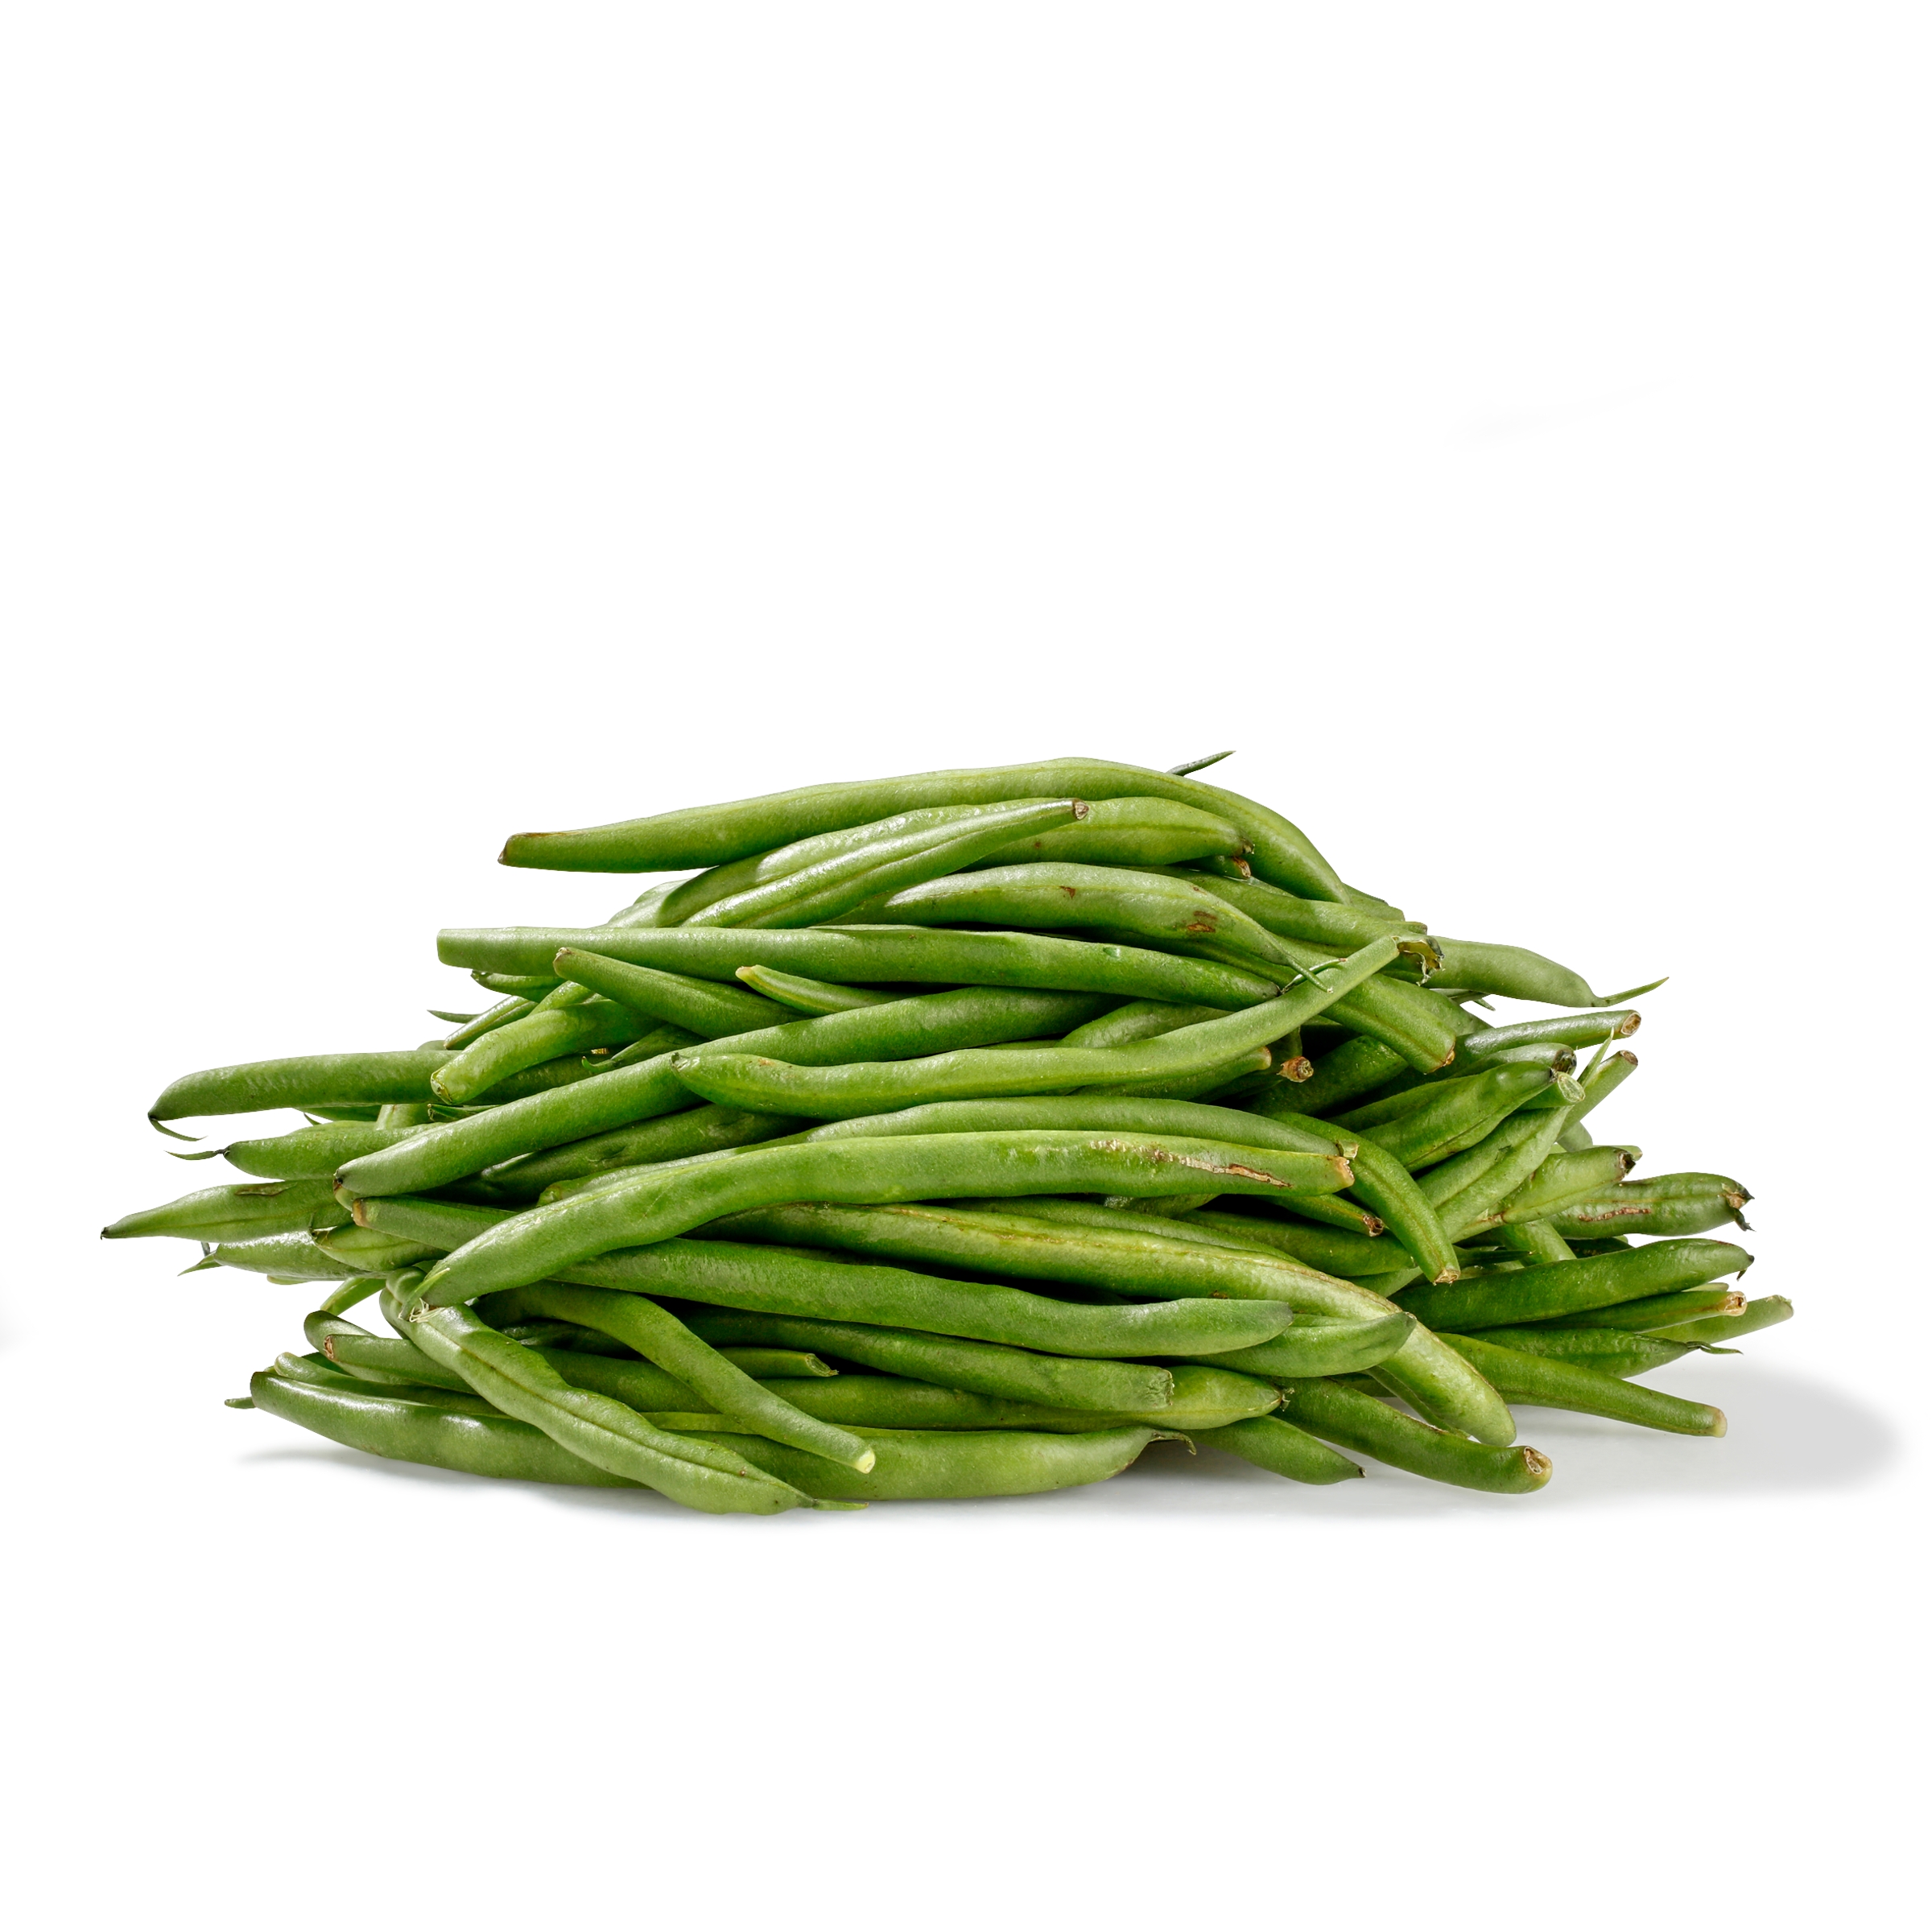 Fresh Green Beans - image 3 of 3